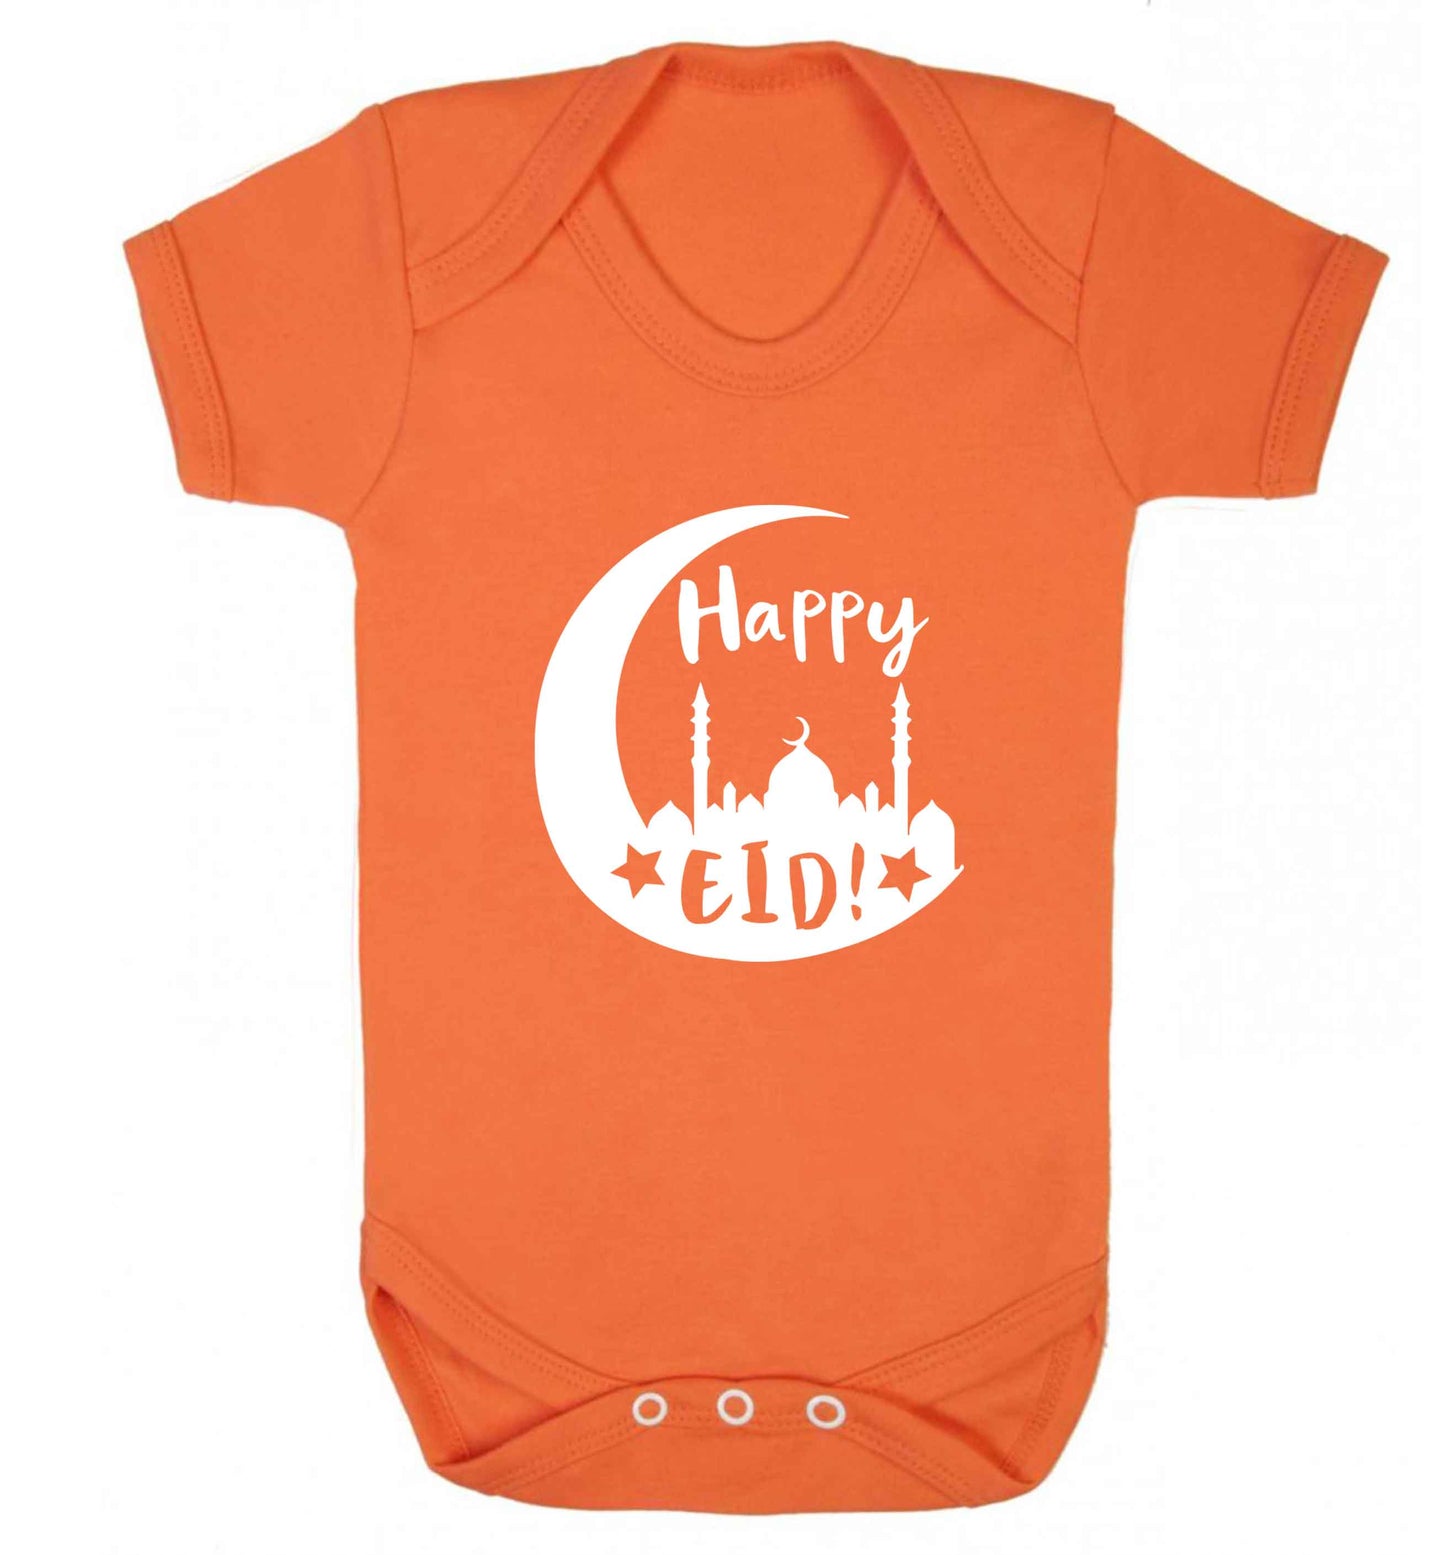 Happy Eid baby vest orange 18-24 months